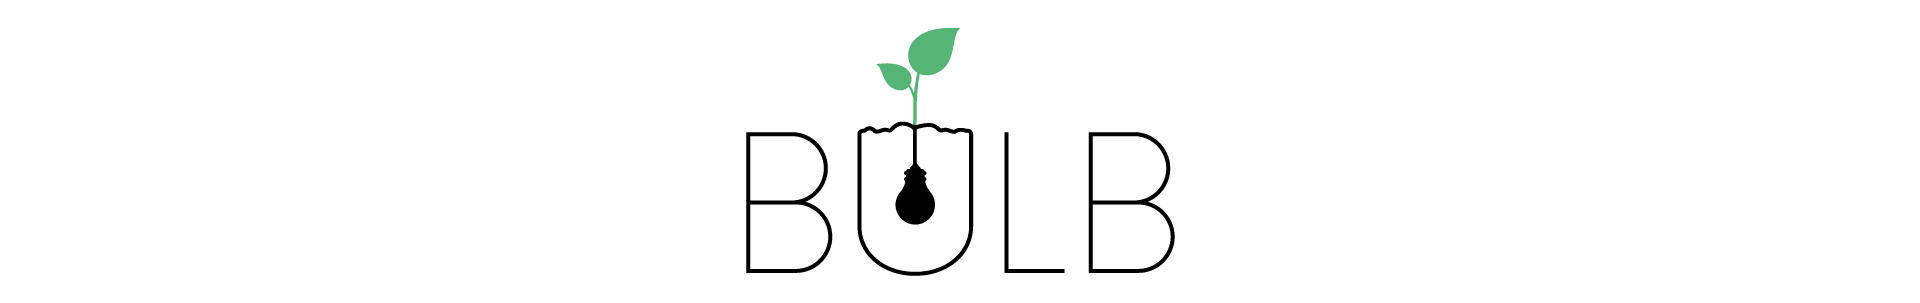 Bulb application mobile logo